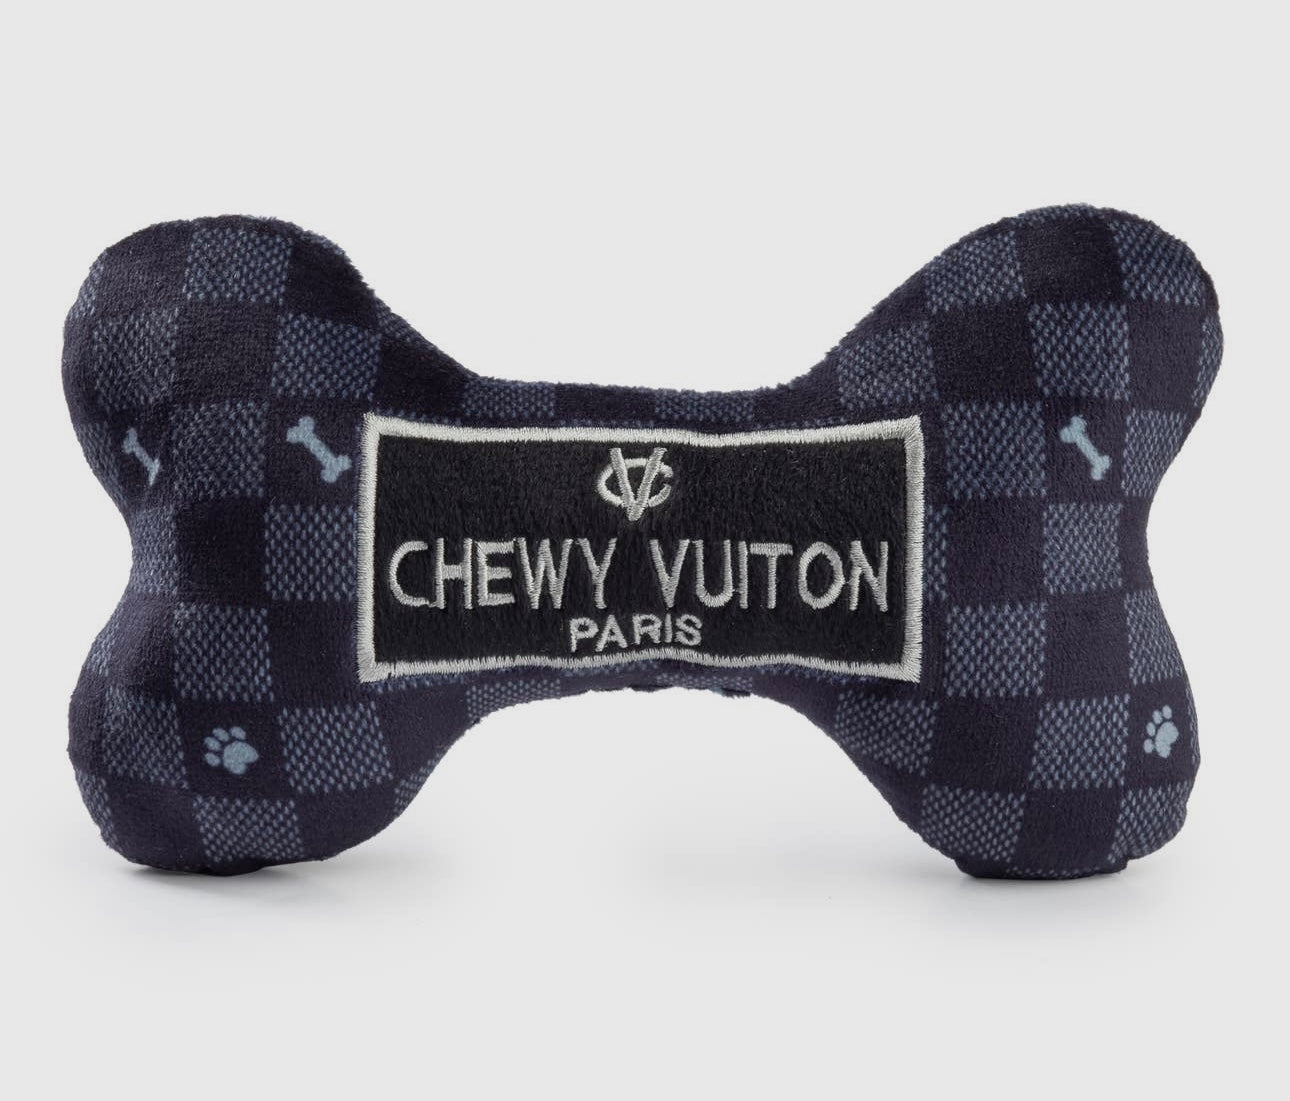 Chewy Vuiton Large dog toy bone